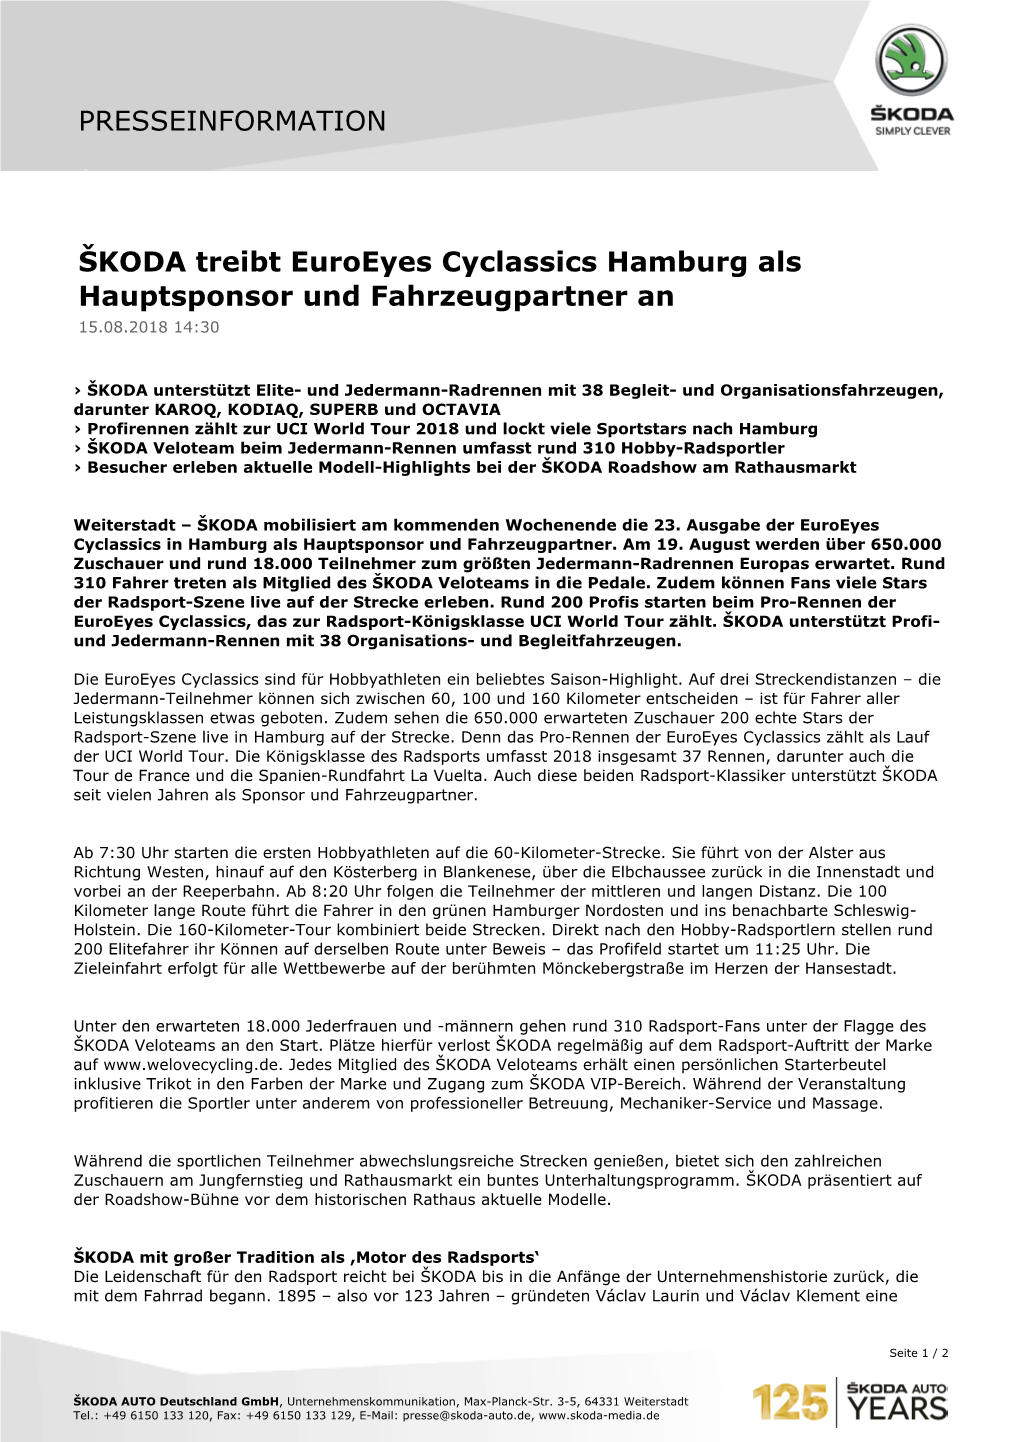 ŠKODA Treibt Euroeyes Cyclassics Hamburg Als Hauptsponsor Und Fahrzeugpartner an 15.08.2018 14:30